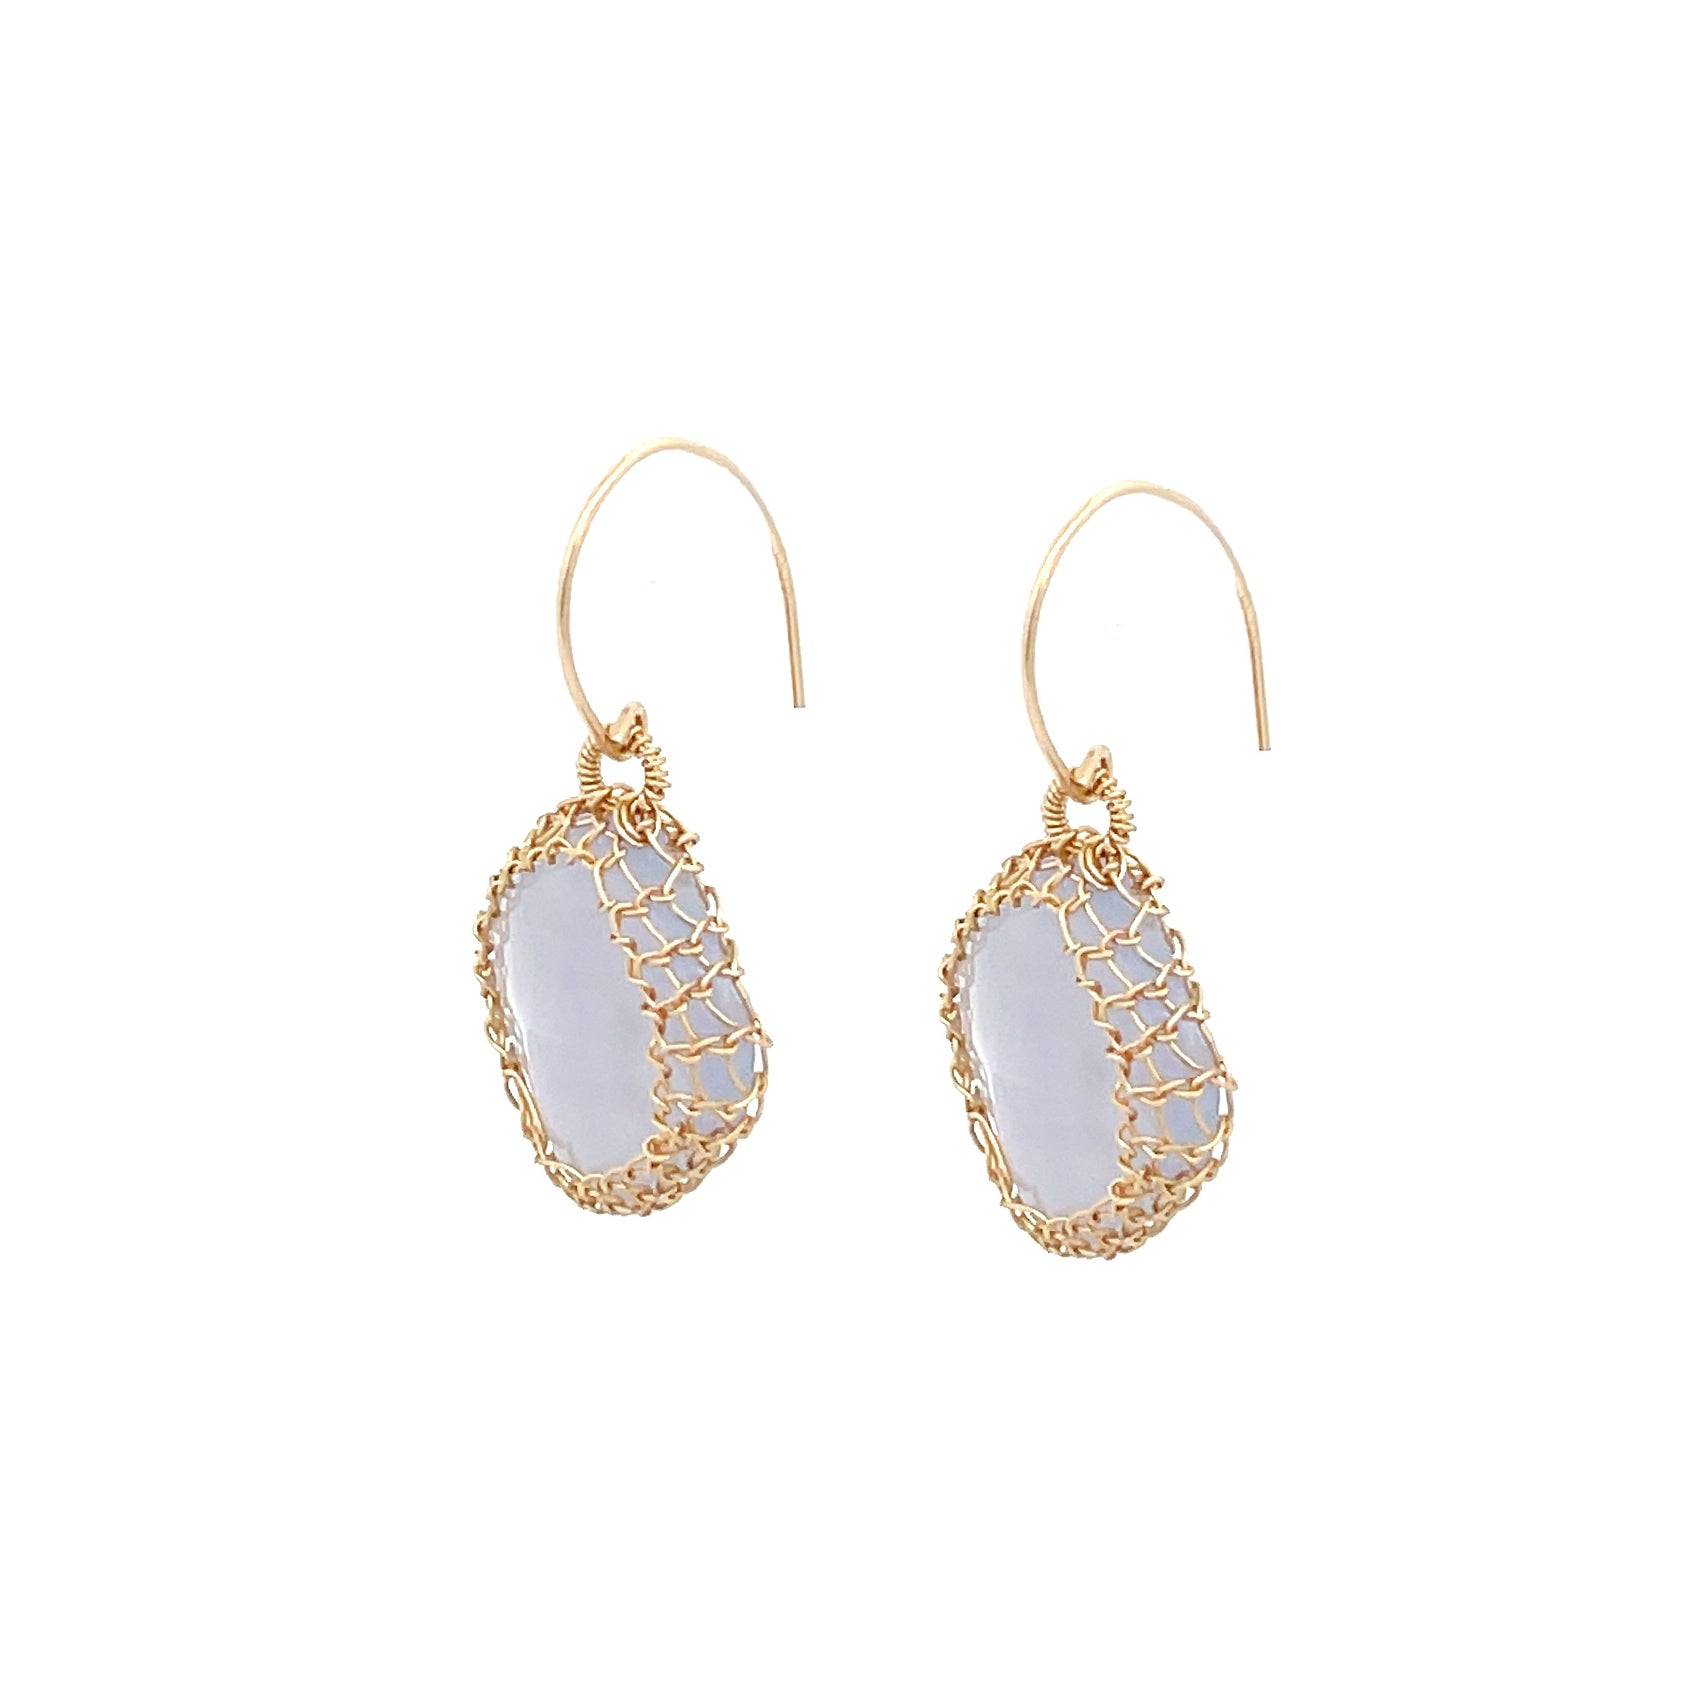 Elegant Diamond-Shaped Drop Earrings by Gosia Orlowska